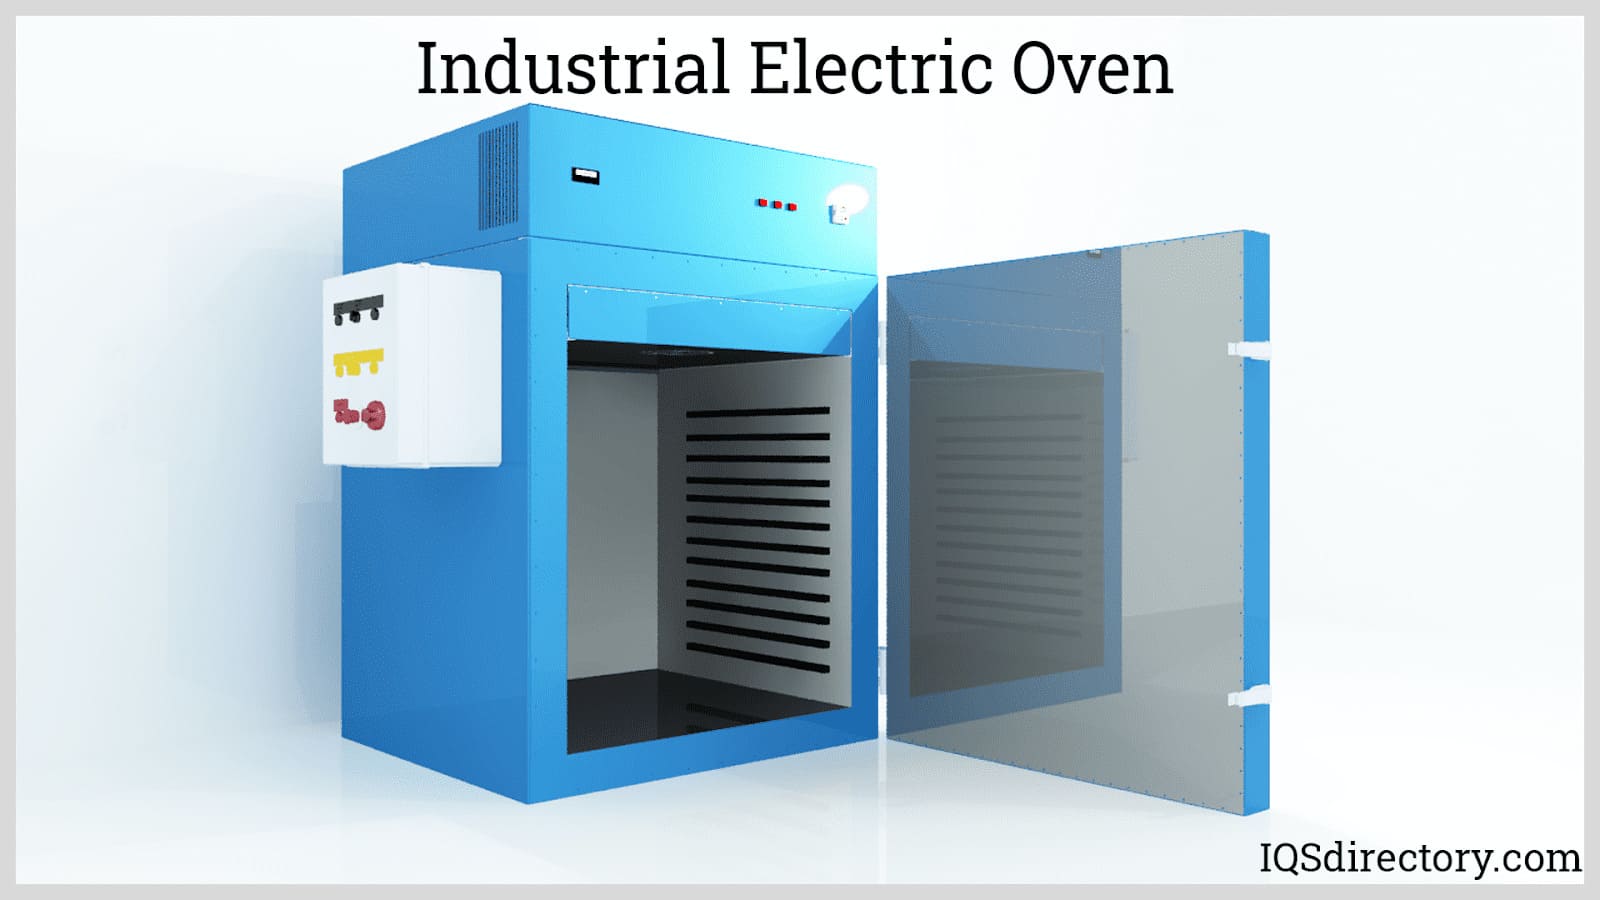 https://www.iqsdirectory.com/articles/industrial-oven/industrial-electric-oven.jpg